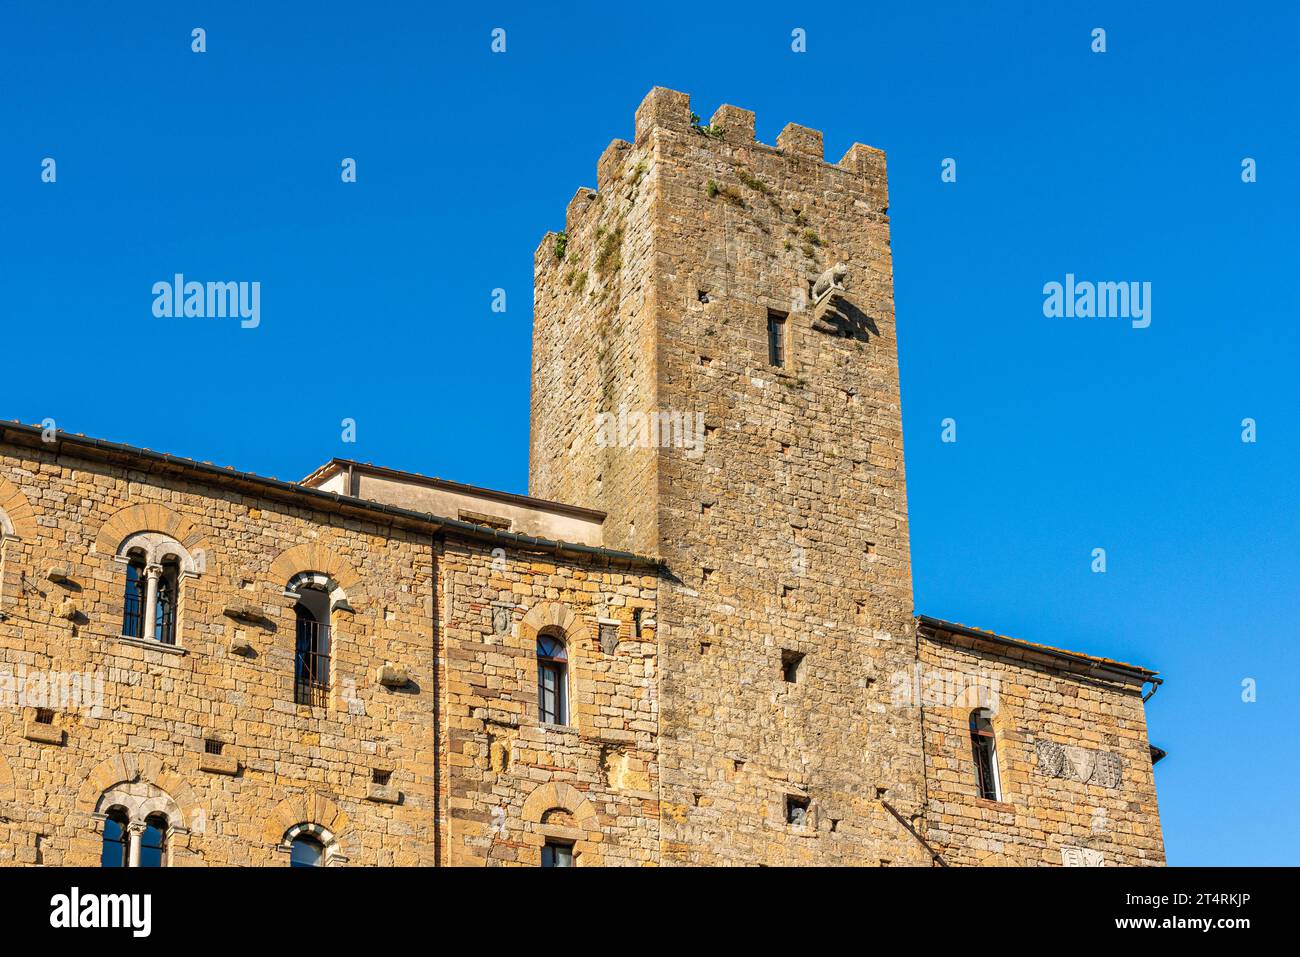 Der berühmte „Torre del Porcellino“ (Schweineturm) in Volterra, in der Provinz Pisa, Toskana, Italien. Stockfoto